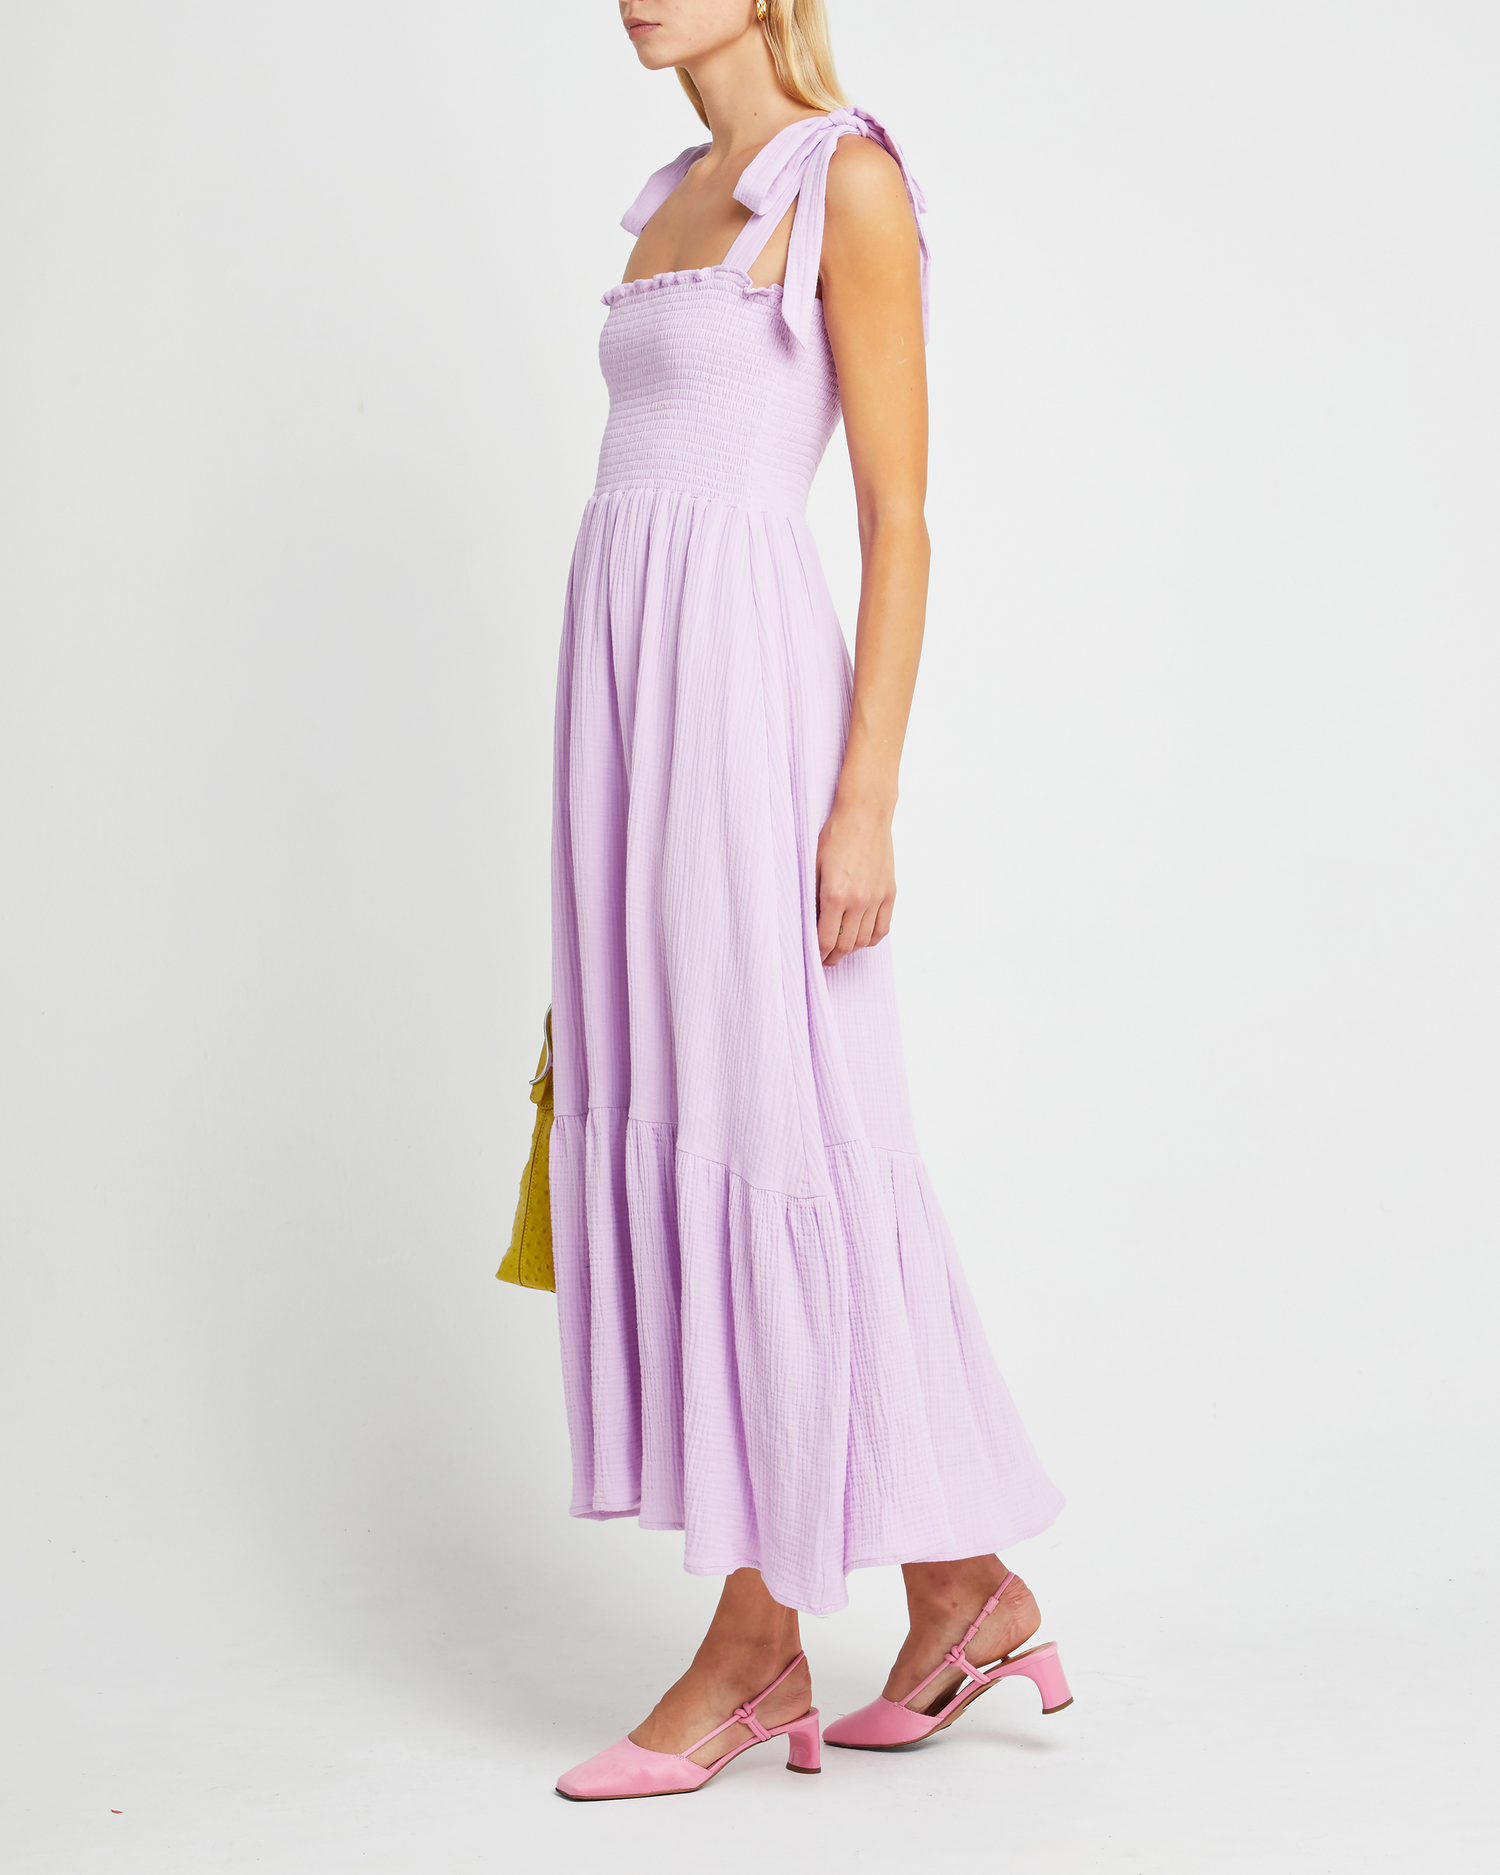 Third image of Cotton Winnie Dress, a purple maxi dress, tie straps, smocked bodice